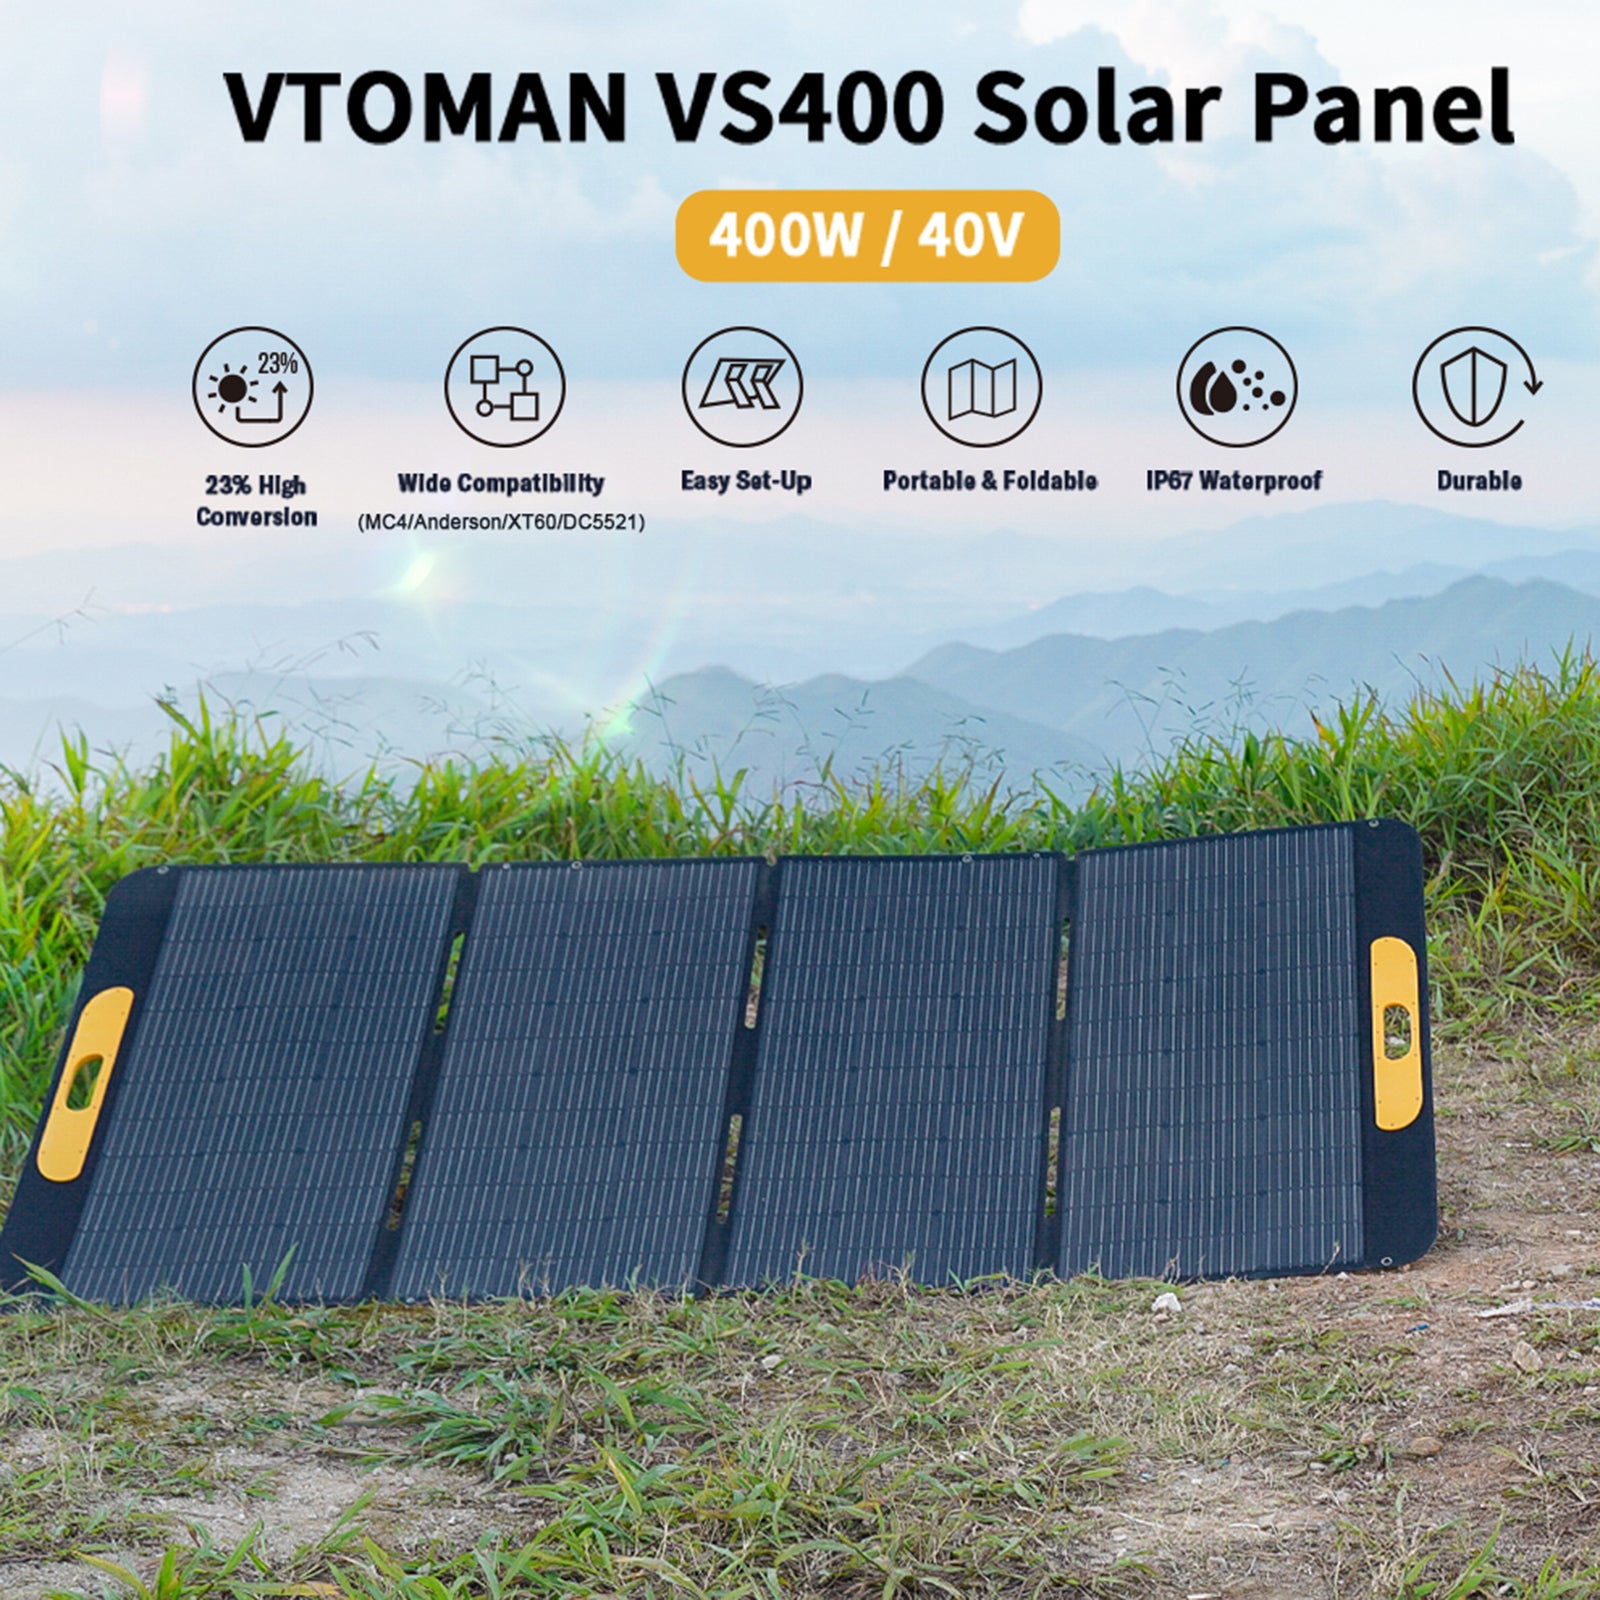 What Can a 400W Portable Solar Panel Run? – VTOMAN